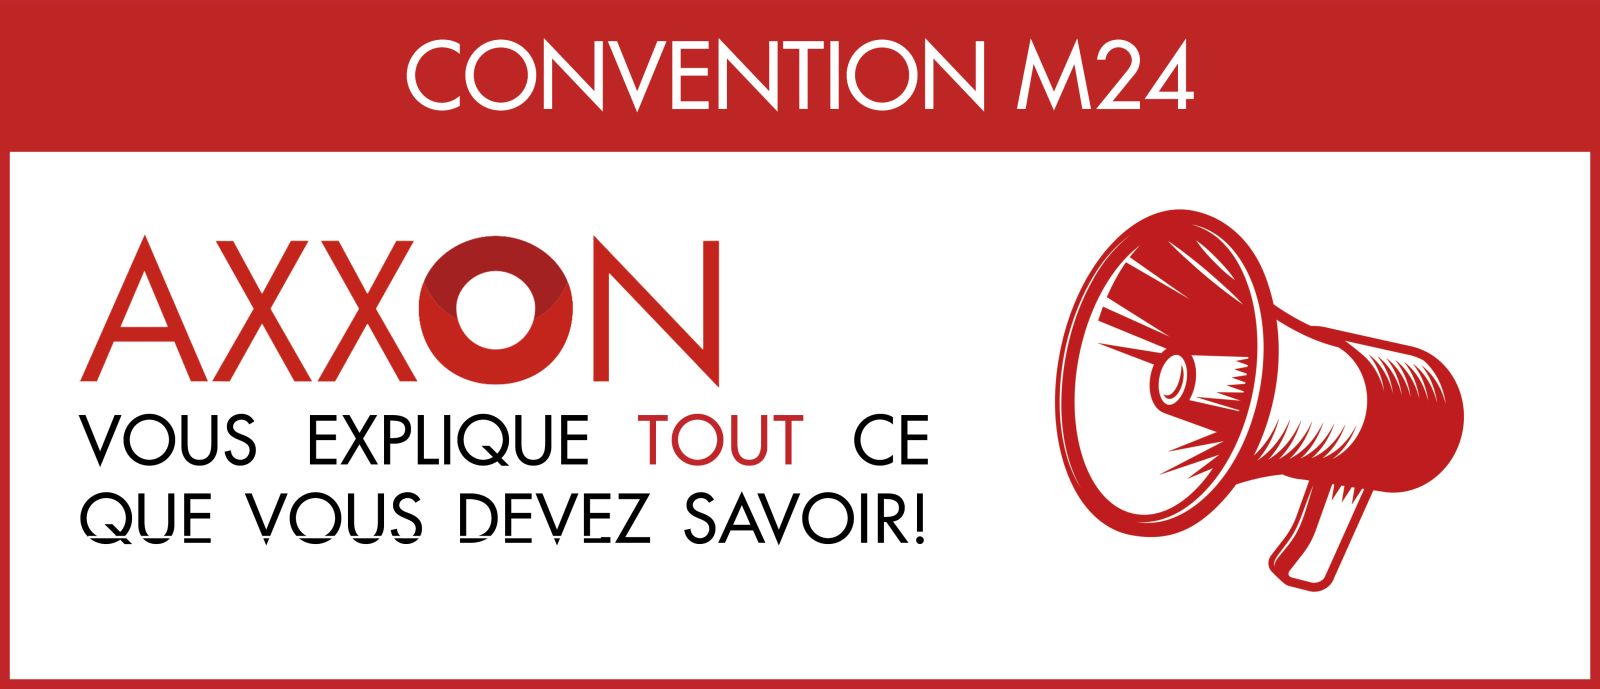 Convention M24